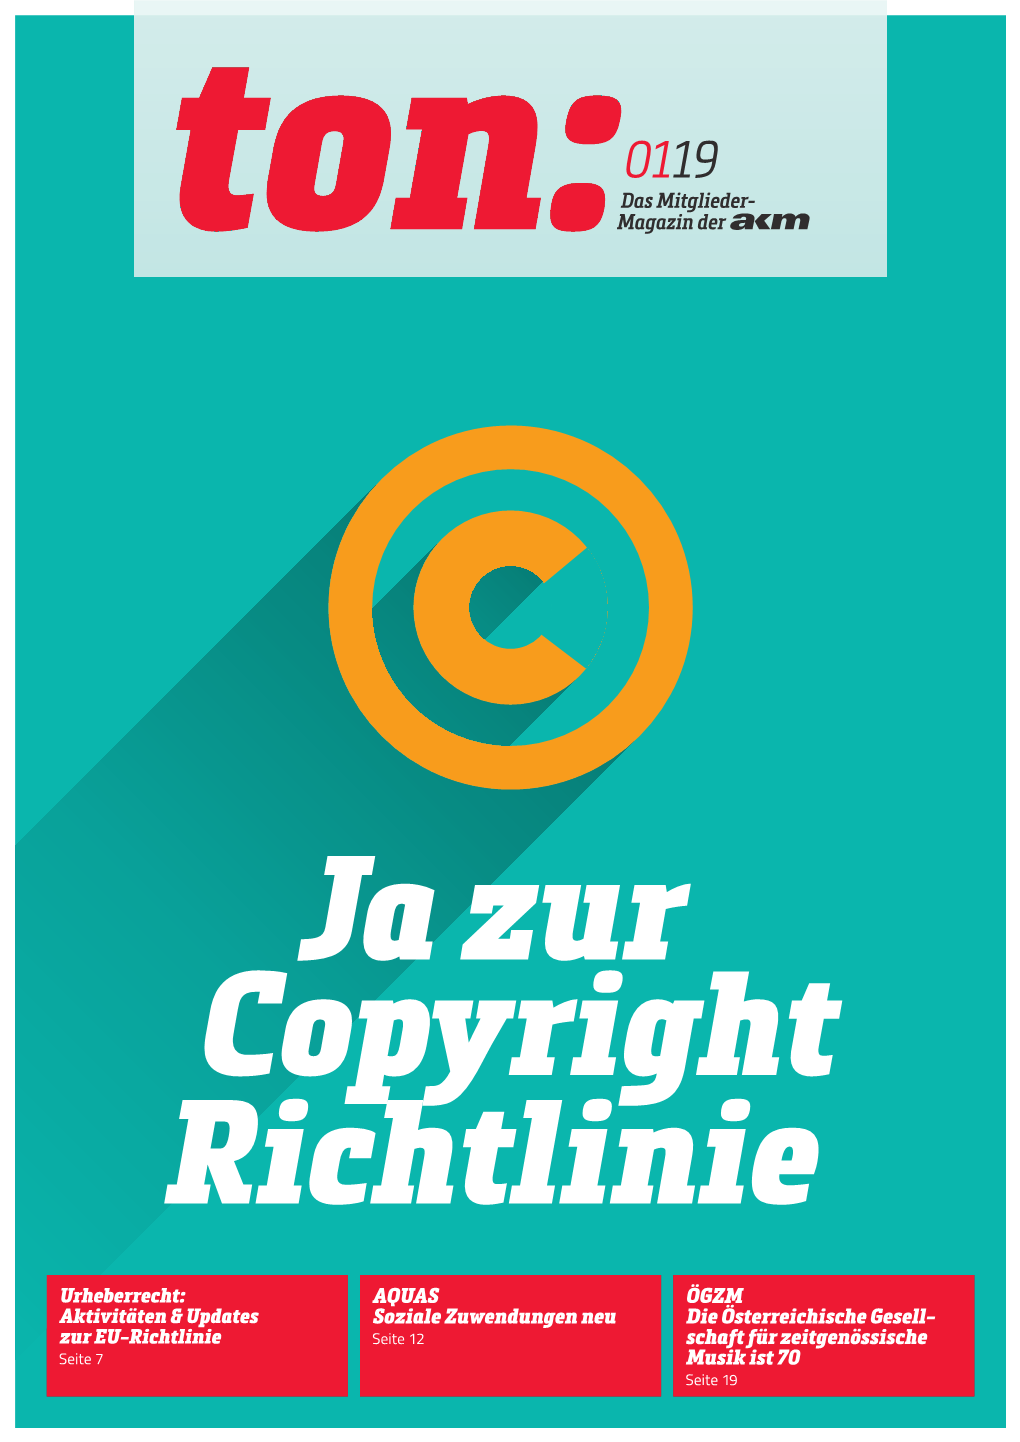 AQUAS Soziale Zuwendungen Neu Urheberrecht